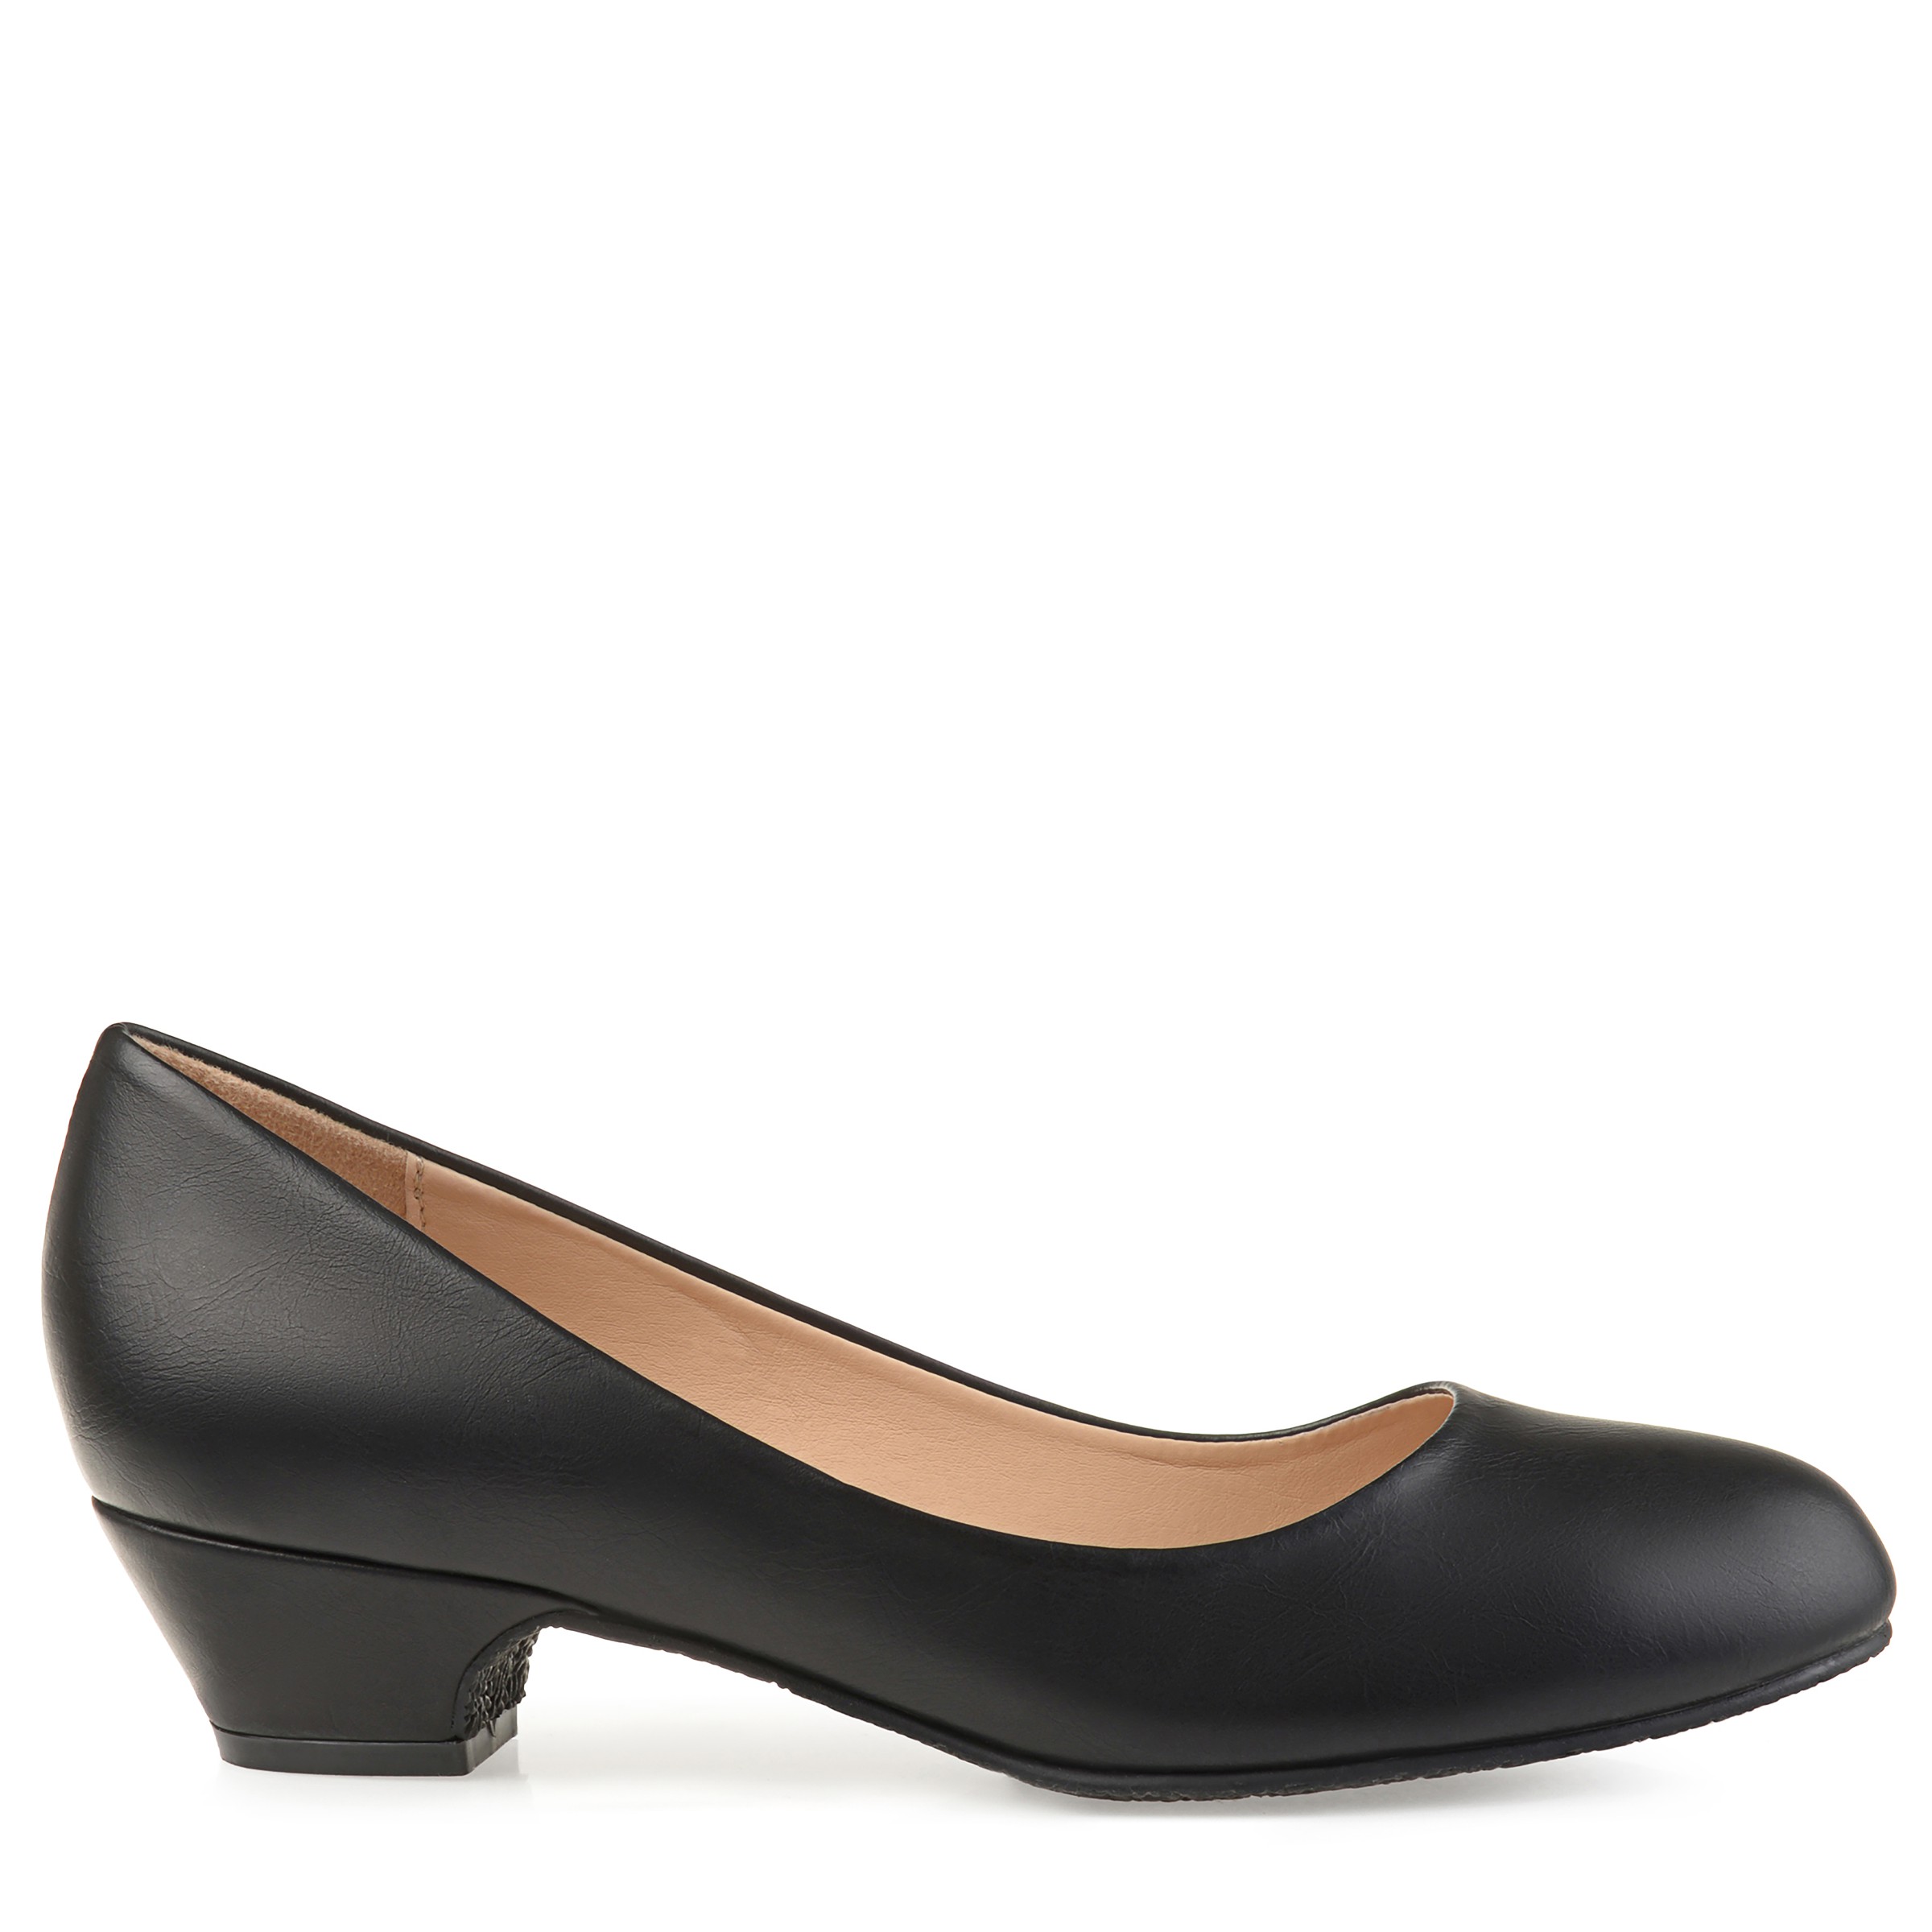 Stiletto Shoes 7M Black 5 Inch Heels Ankle Strap Platform Closed Toe Faux  Suede | eBay